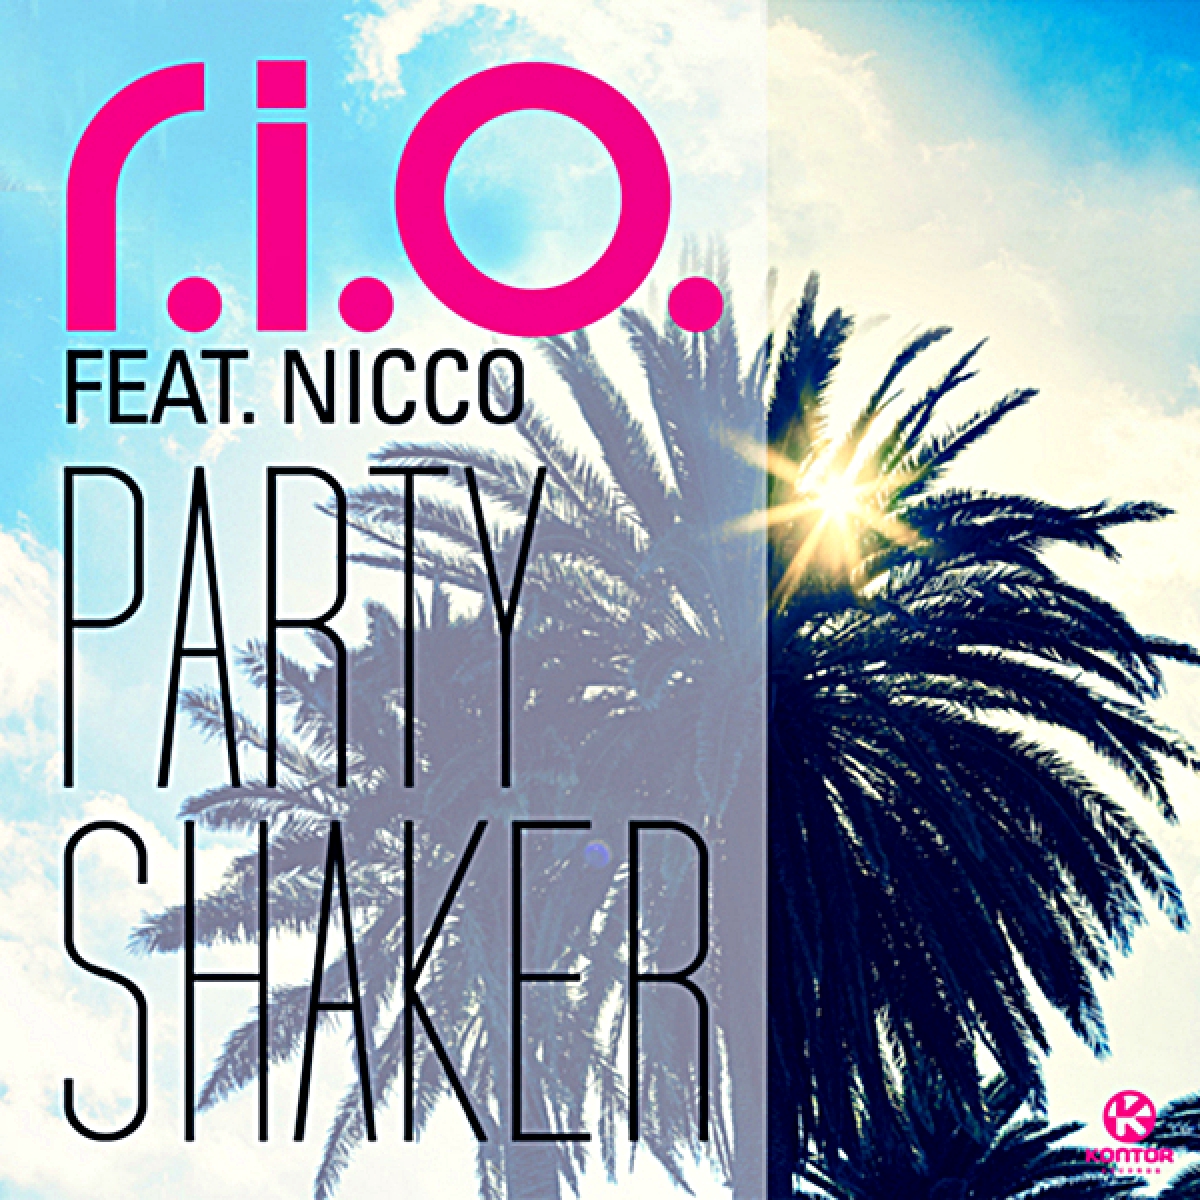 R.I.O. - Party Shaker (feat. Nicco)